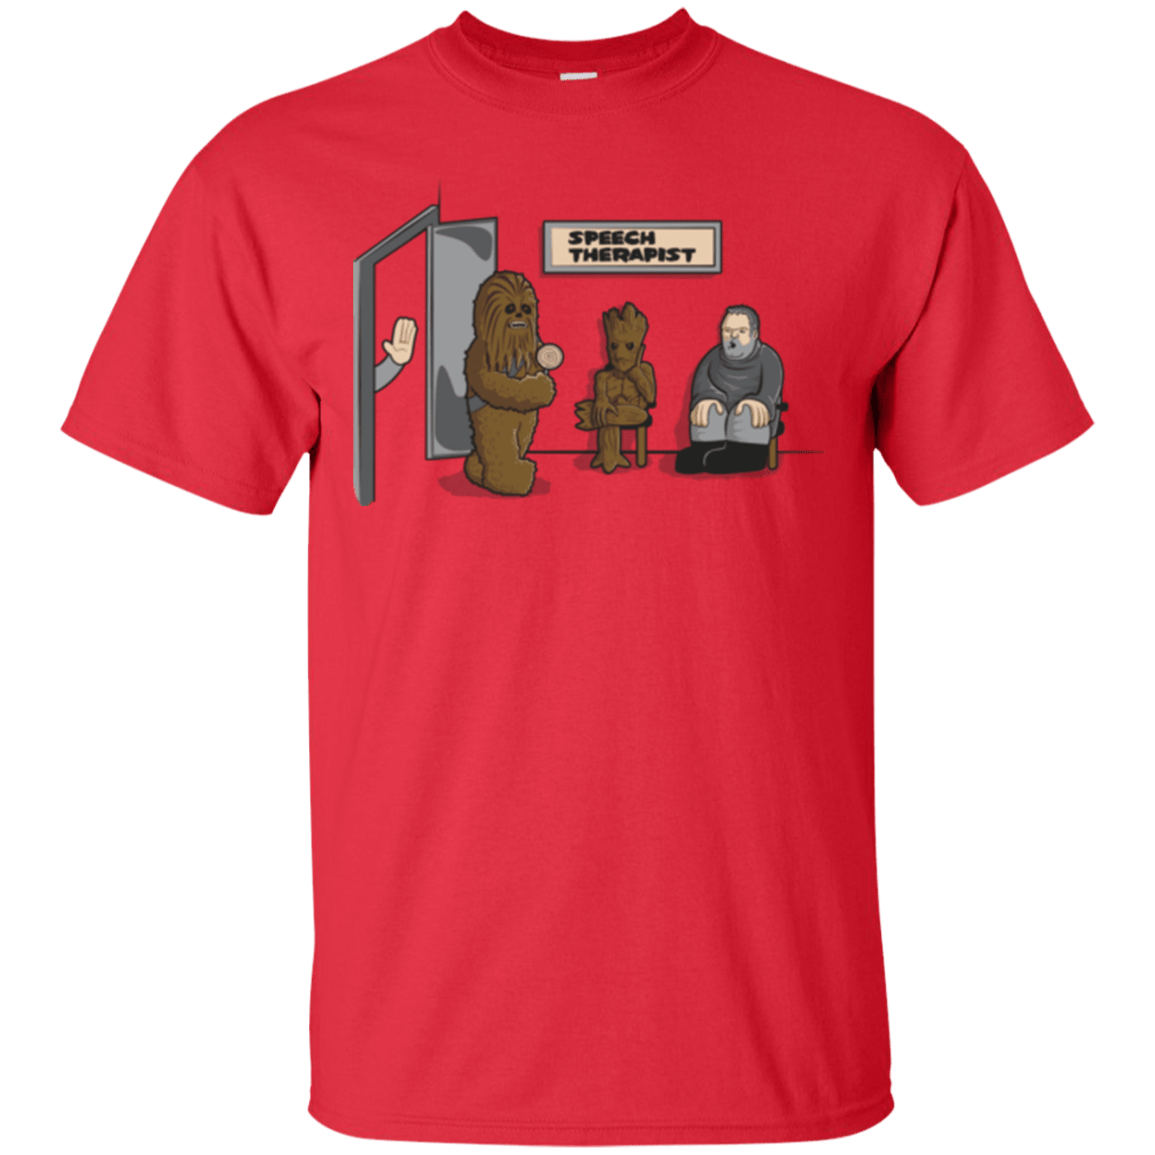 T-Shirts Red / S Speech Therapist T-Shirt